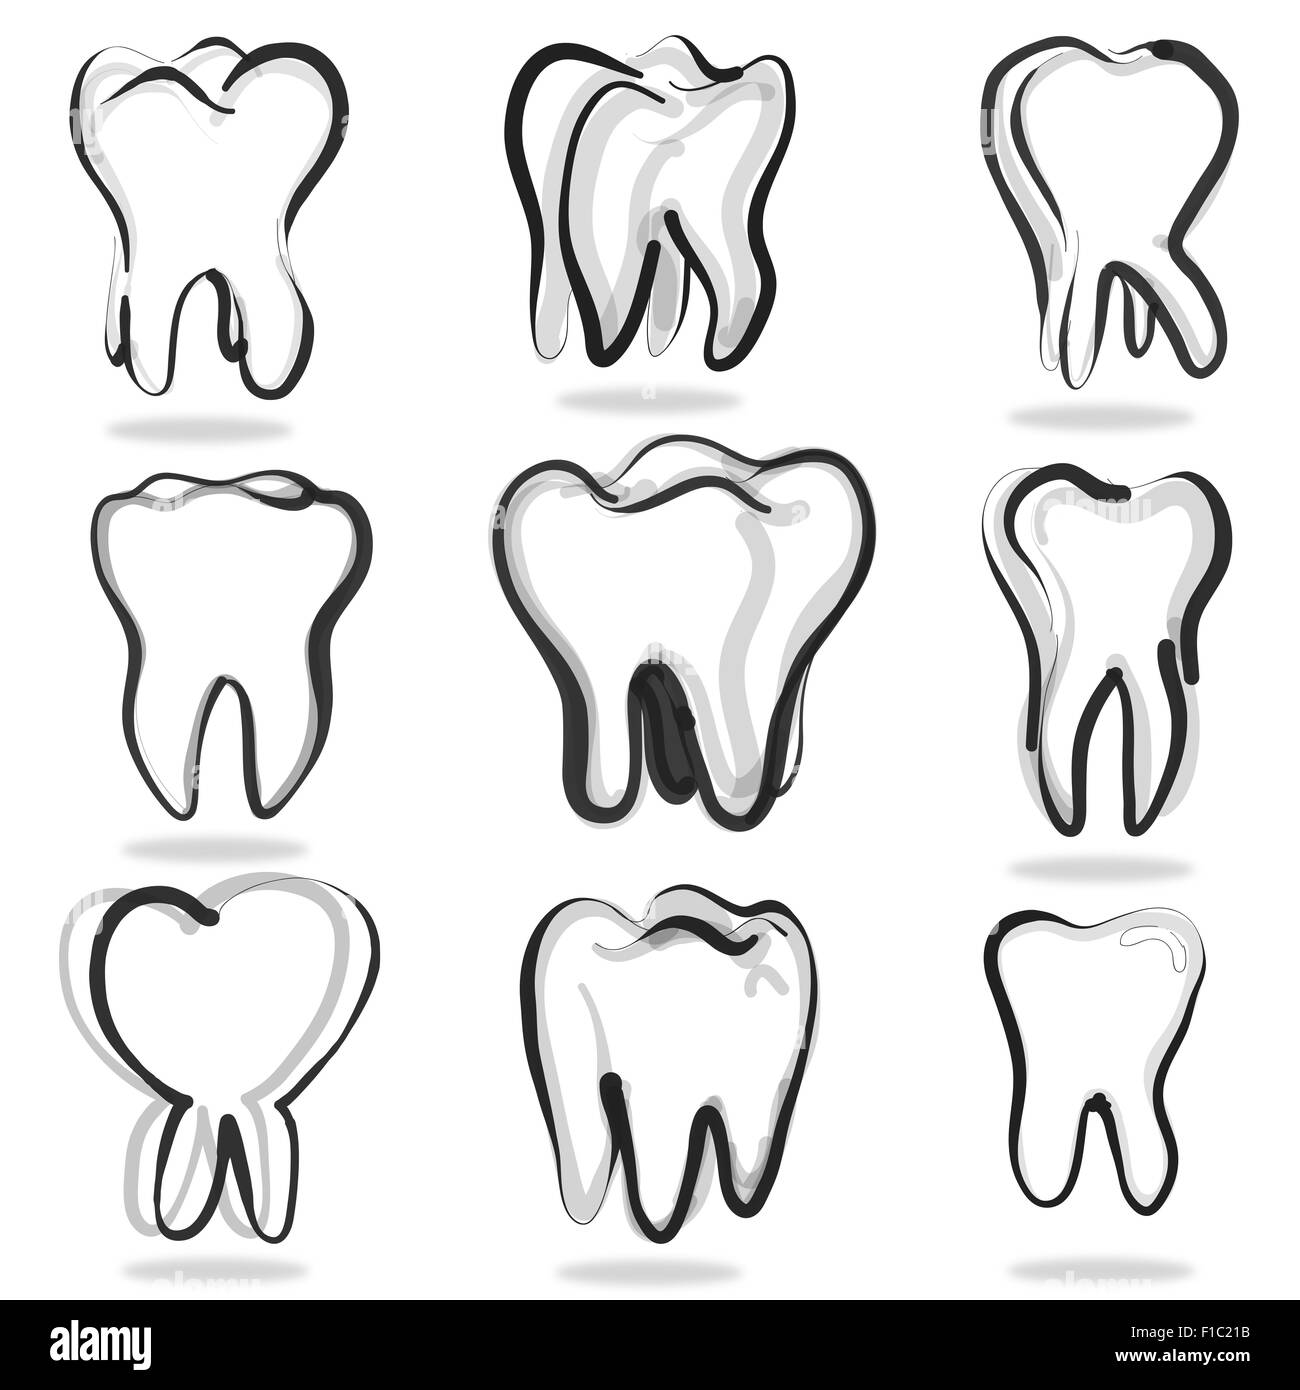 Human teeth set isolated on white background Stock Photo